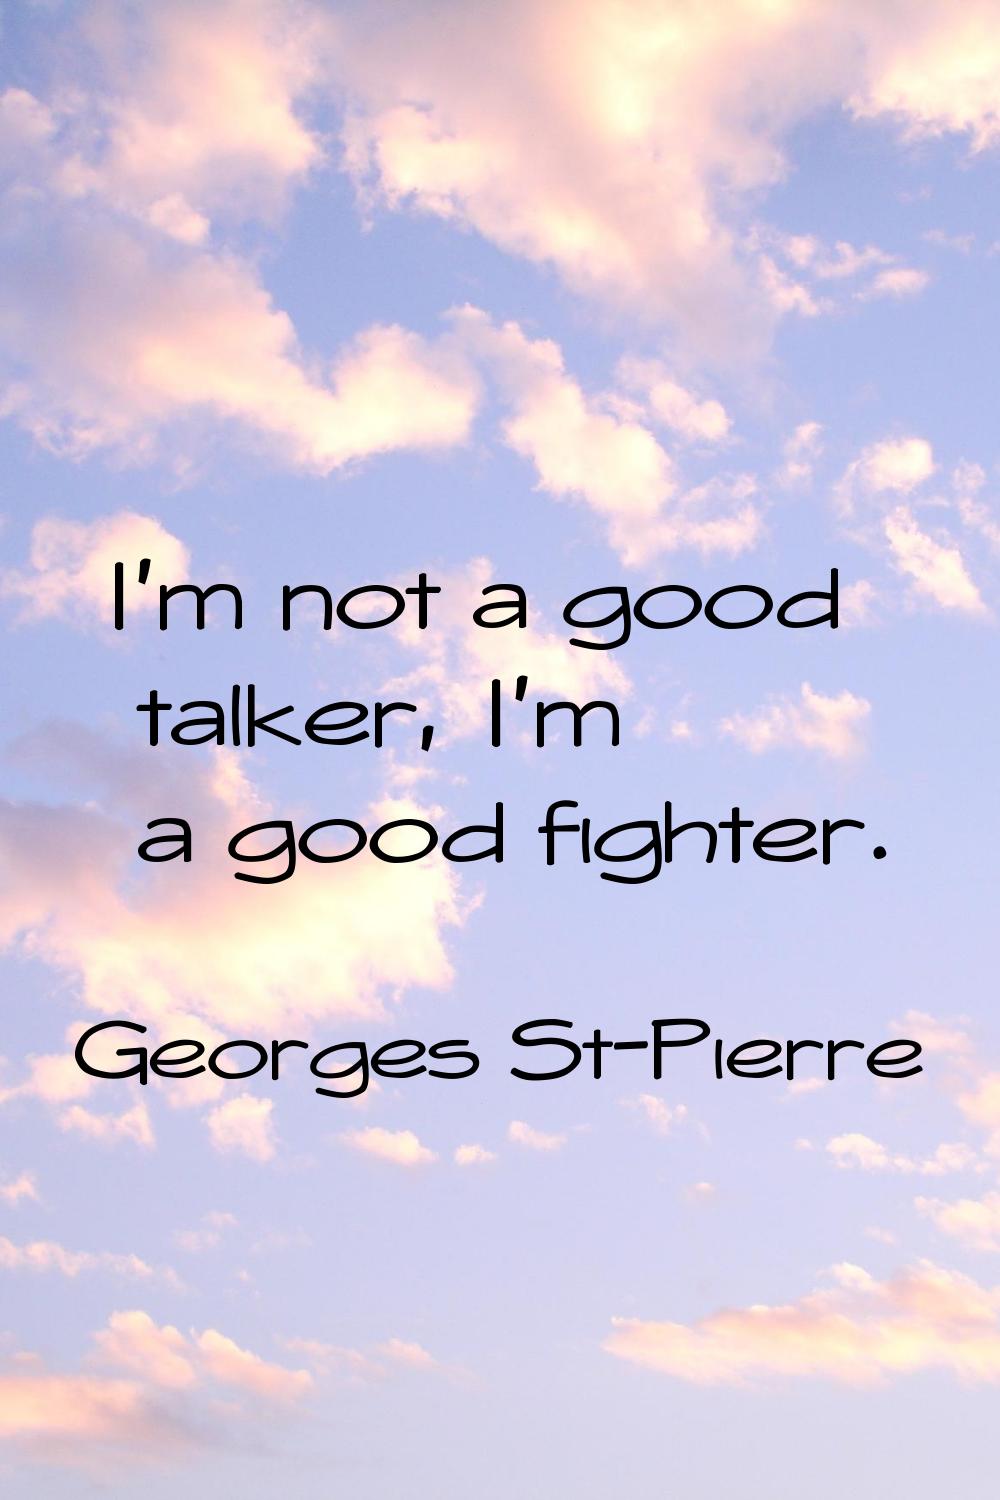 I'm not a good talker, I'm a good fighter.